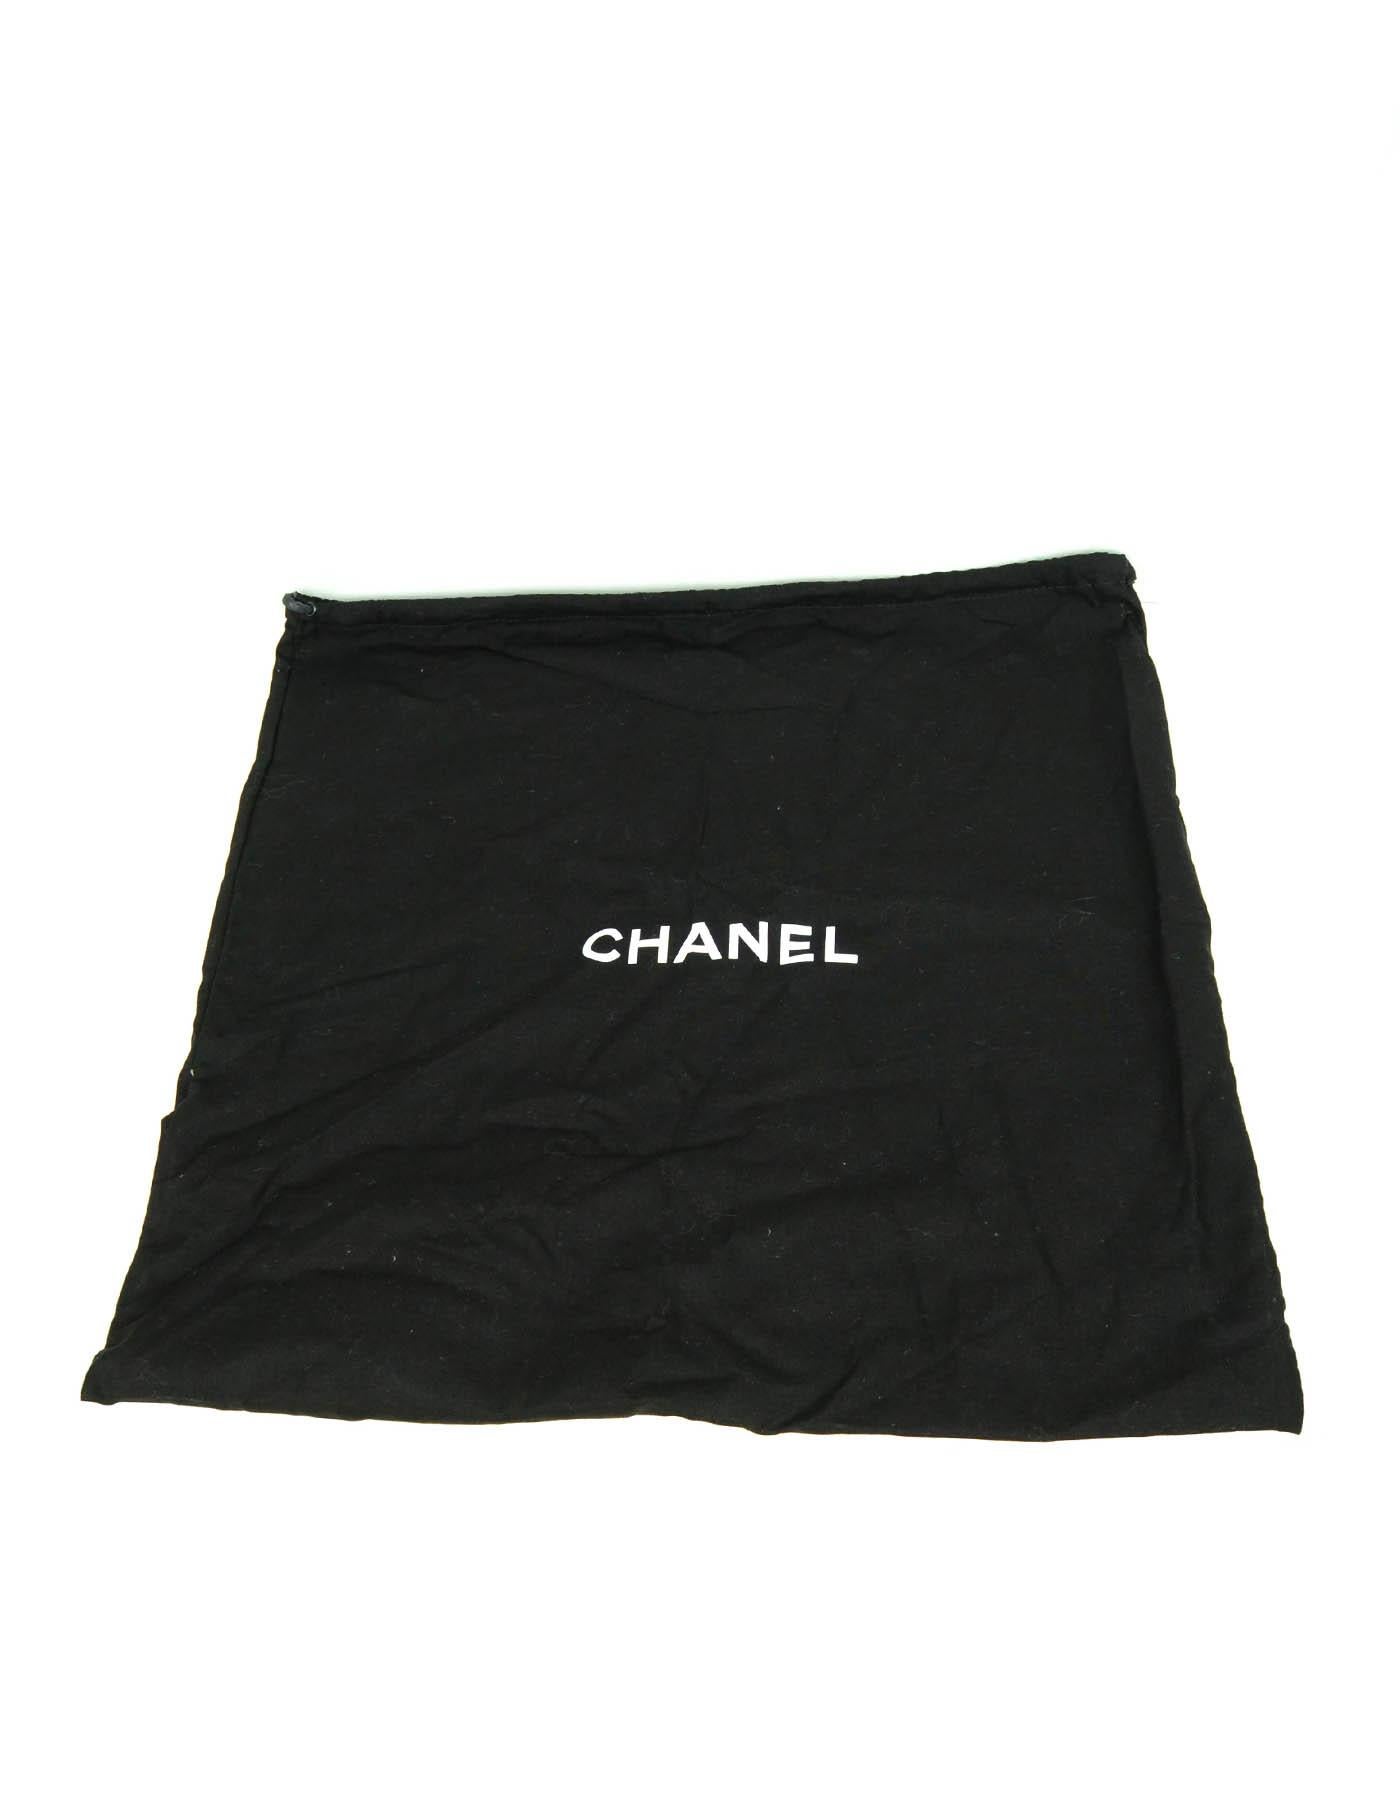 Chanel Ecru Beige Canvas Medium Deauville Tote Bag 4